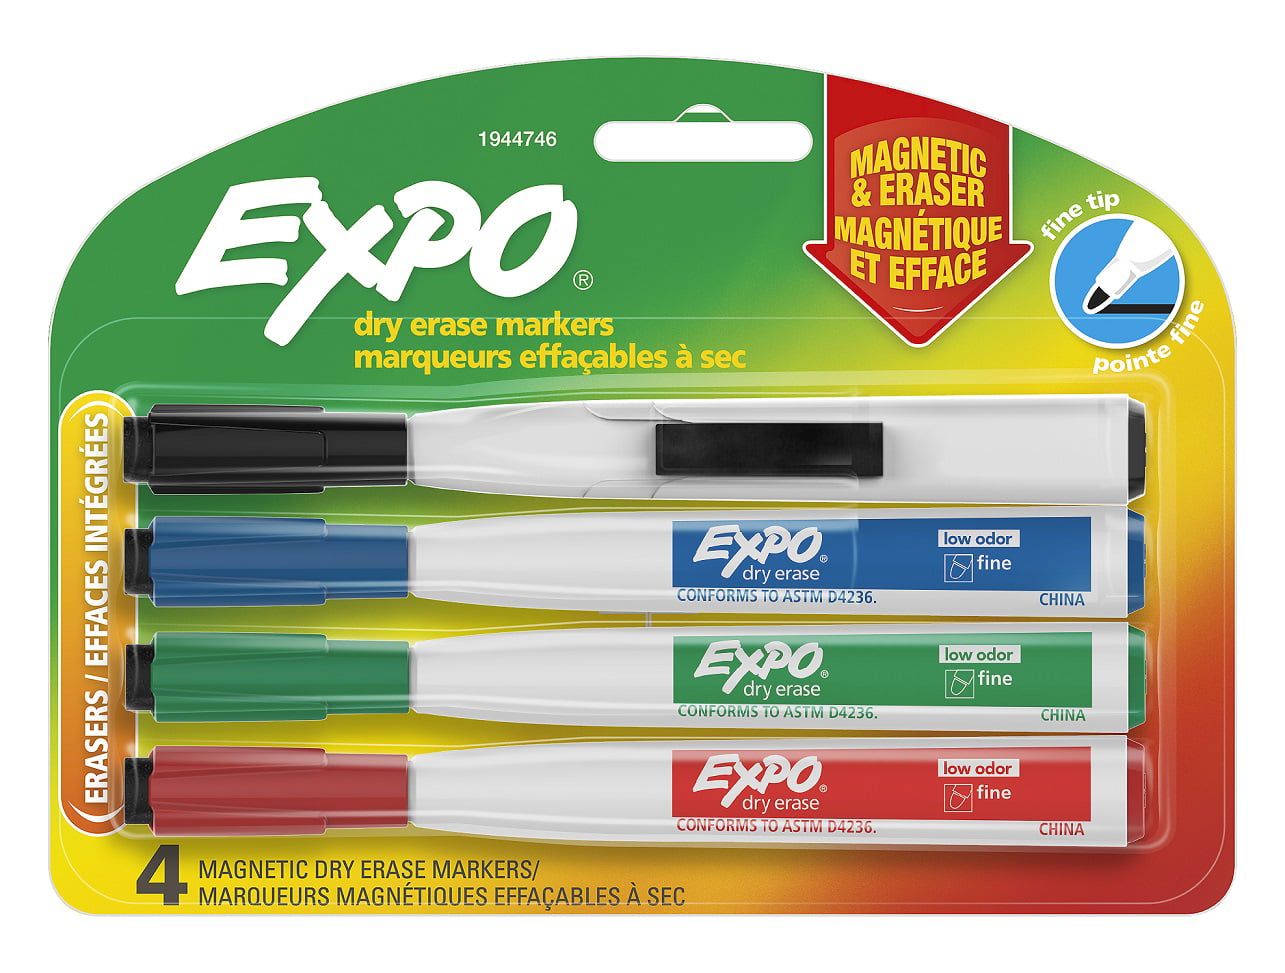 Office Pro Magnetic Dry Erase Board Marker Whiteboard Pens & 2x Magnets & Eraser 